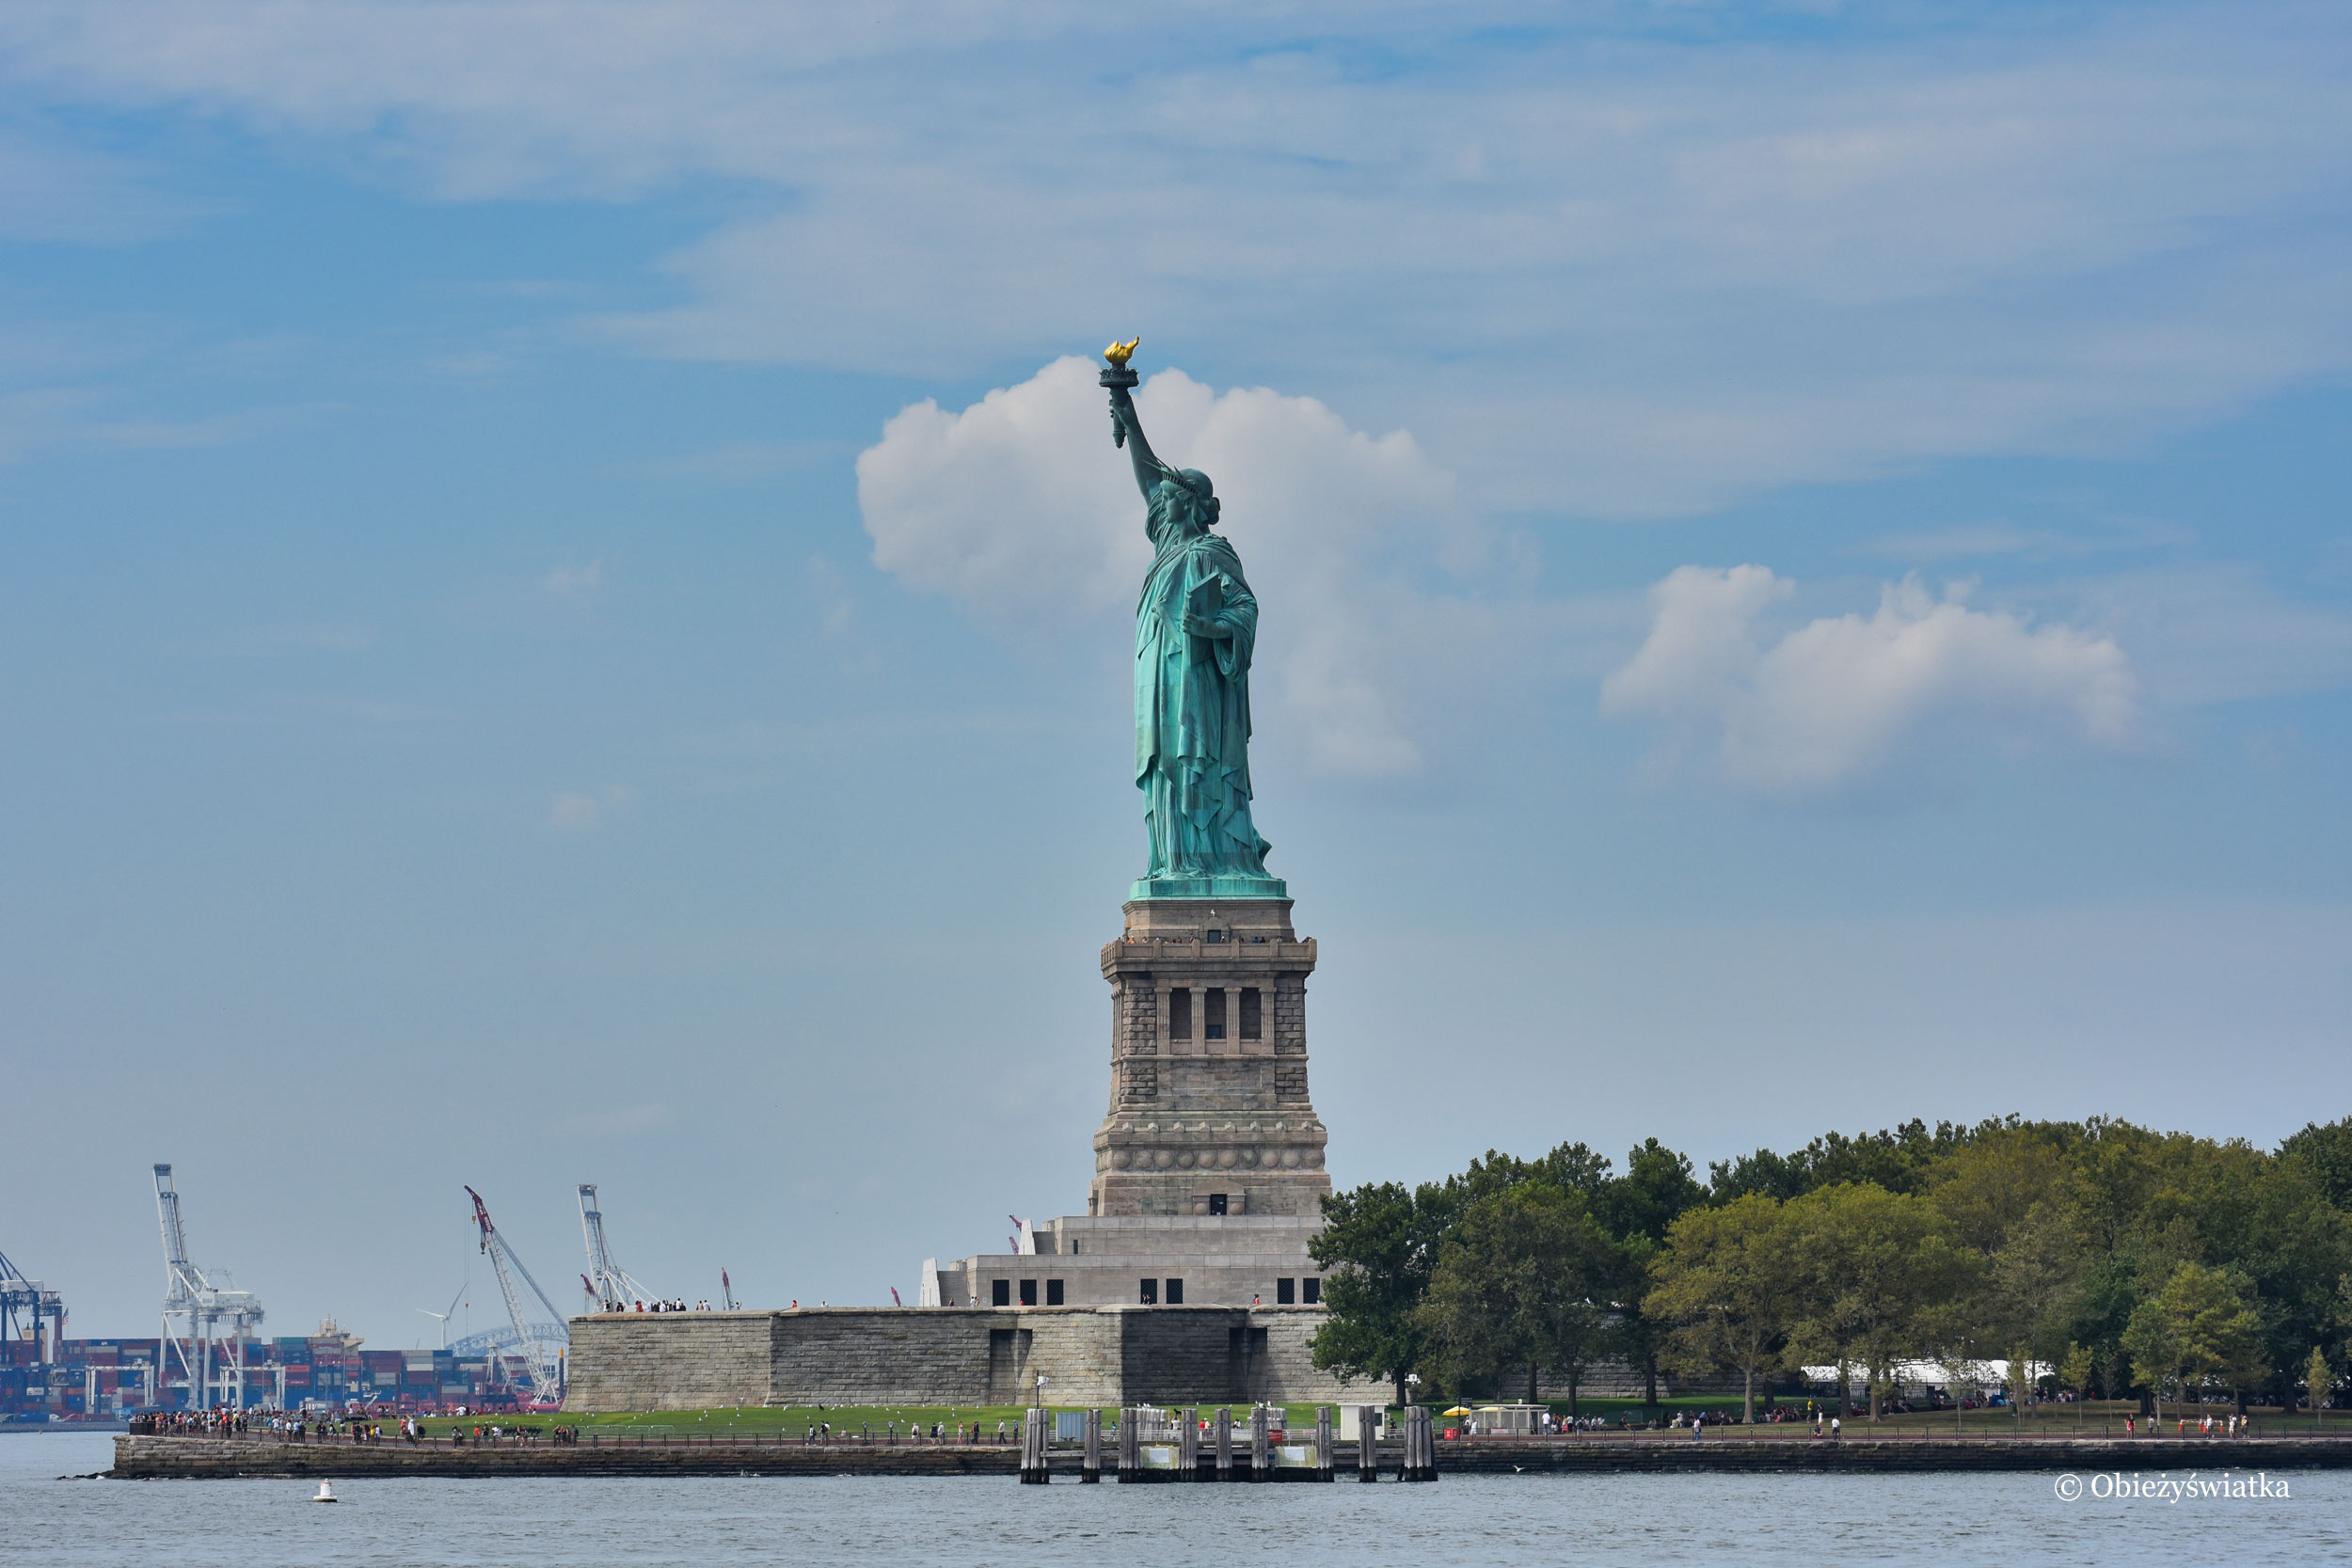 Statue of Liberty, Liberty Island, NYC